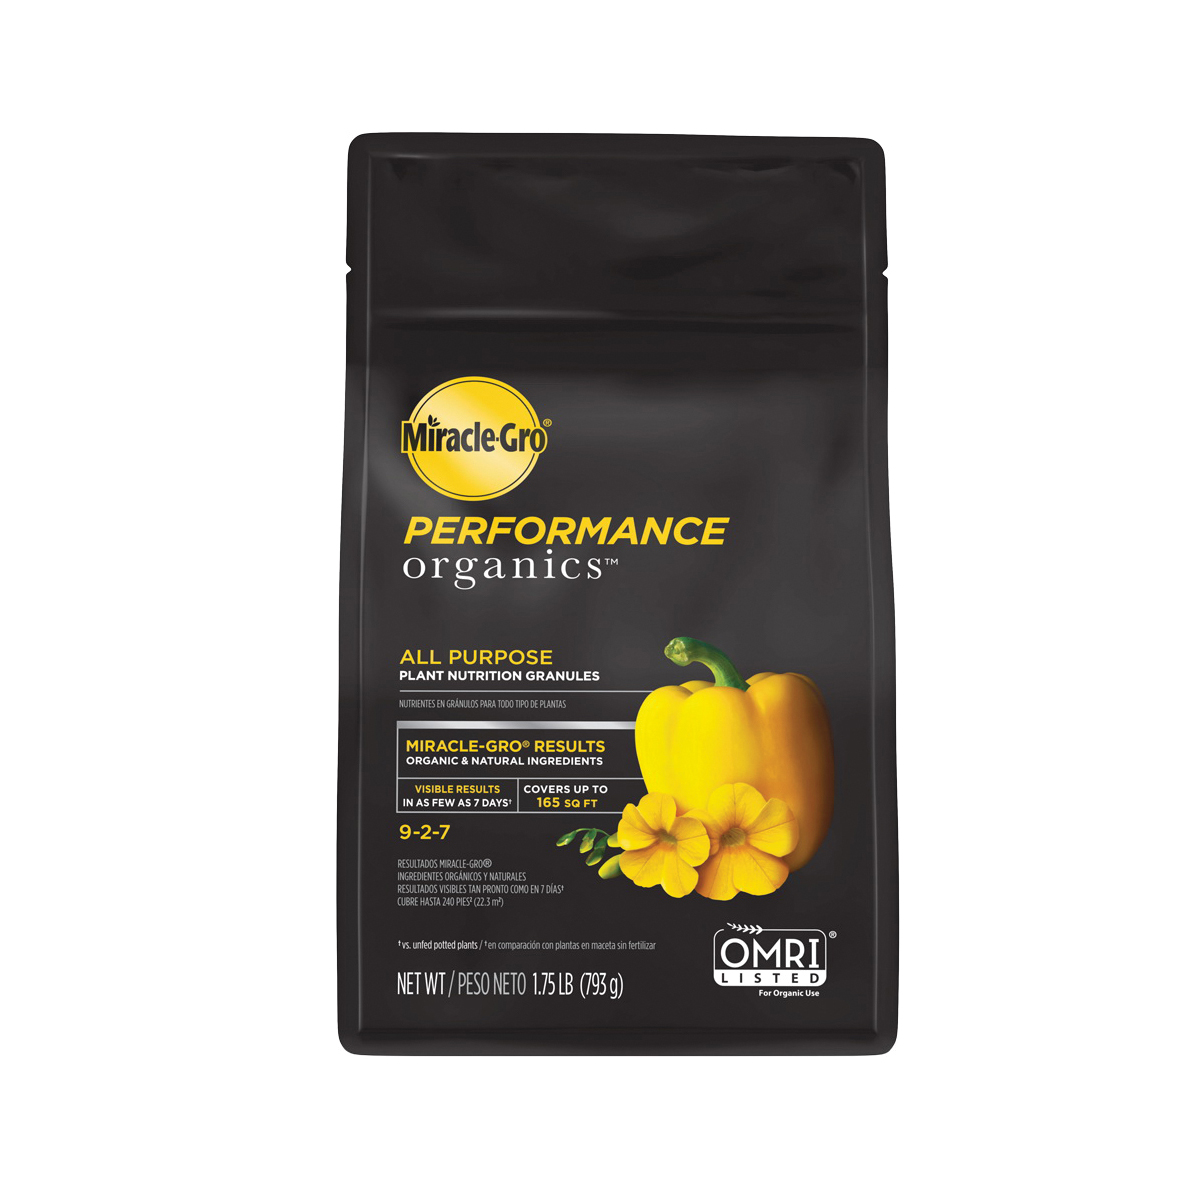 Miracle-Gro Performance Organics 3003601 All-Purpose Plant Nutrition, 1.75 lb Bag, Solid, 9-2-7 N-P-K Ratio - 5